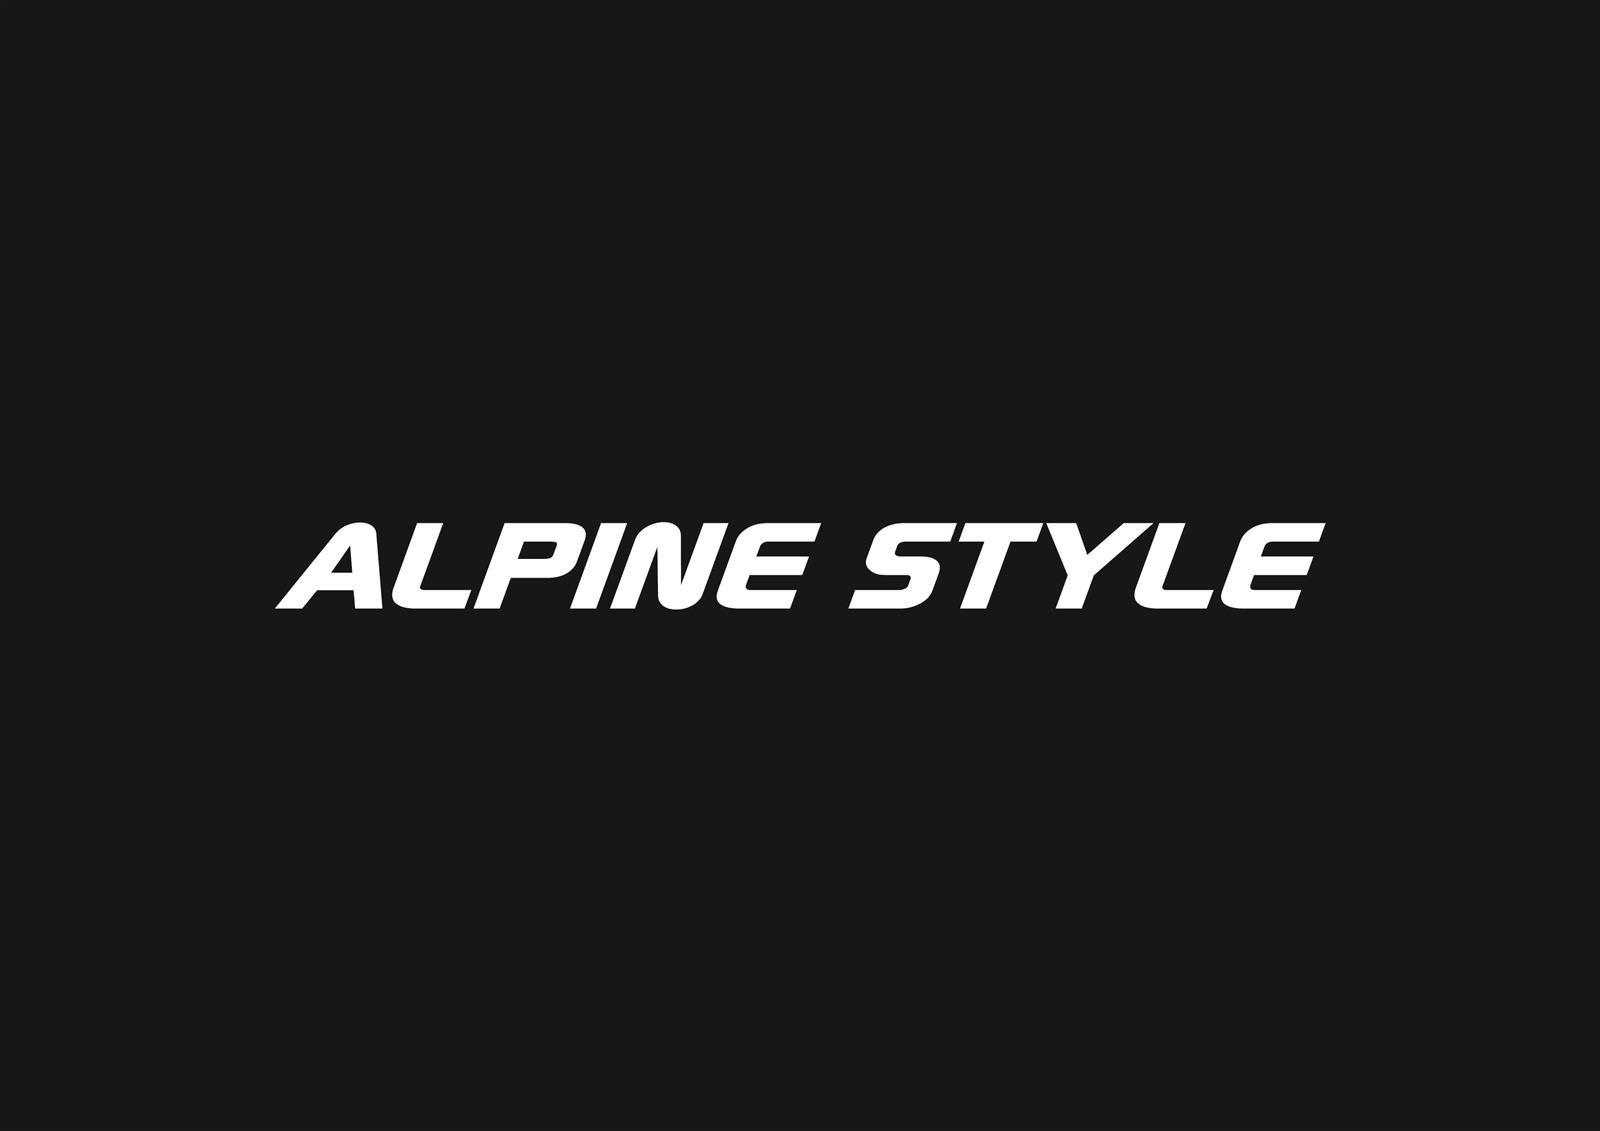 Alpine Style